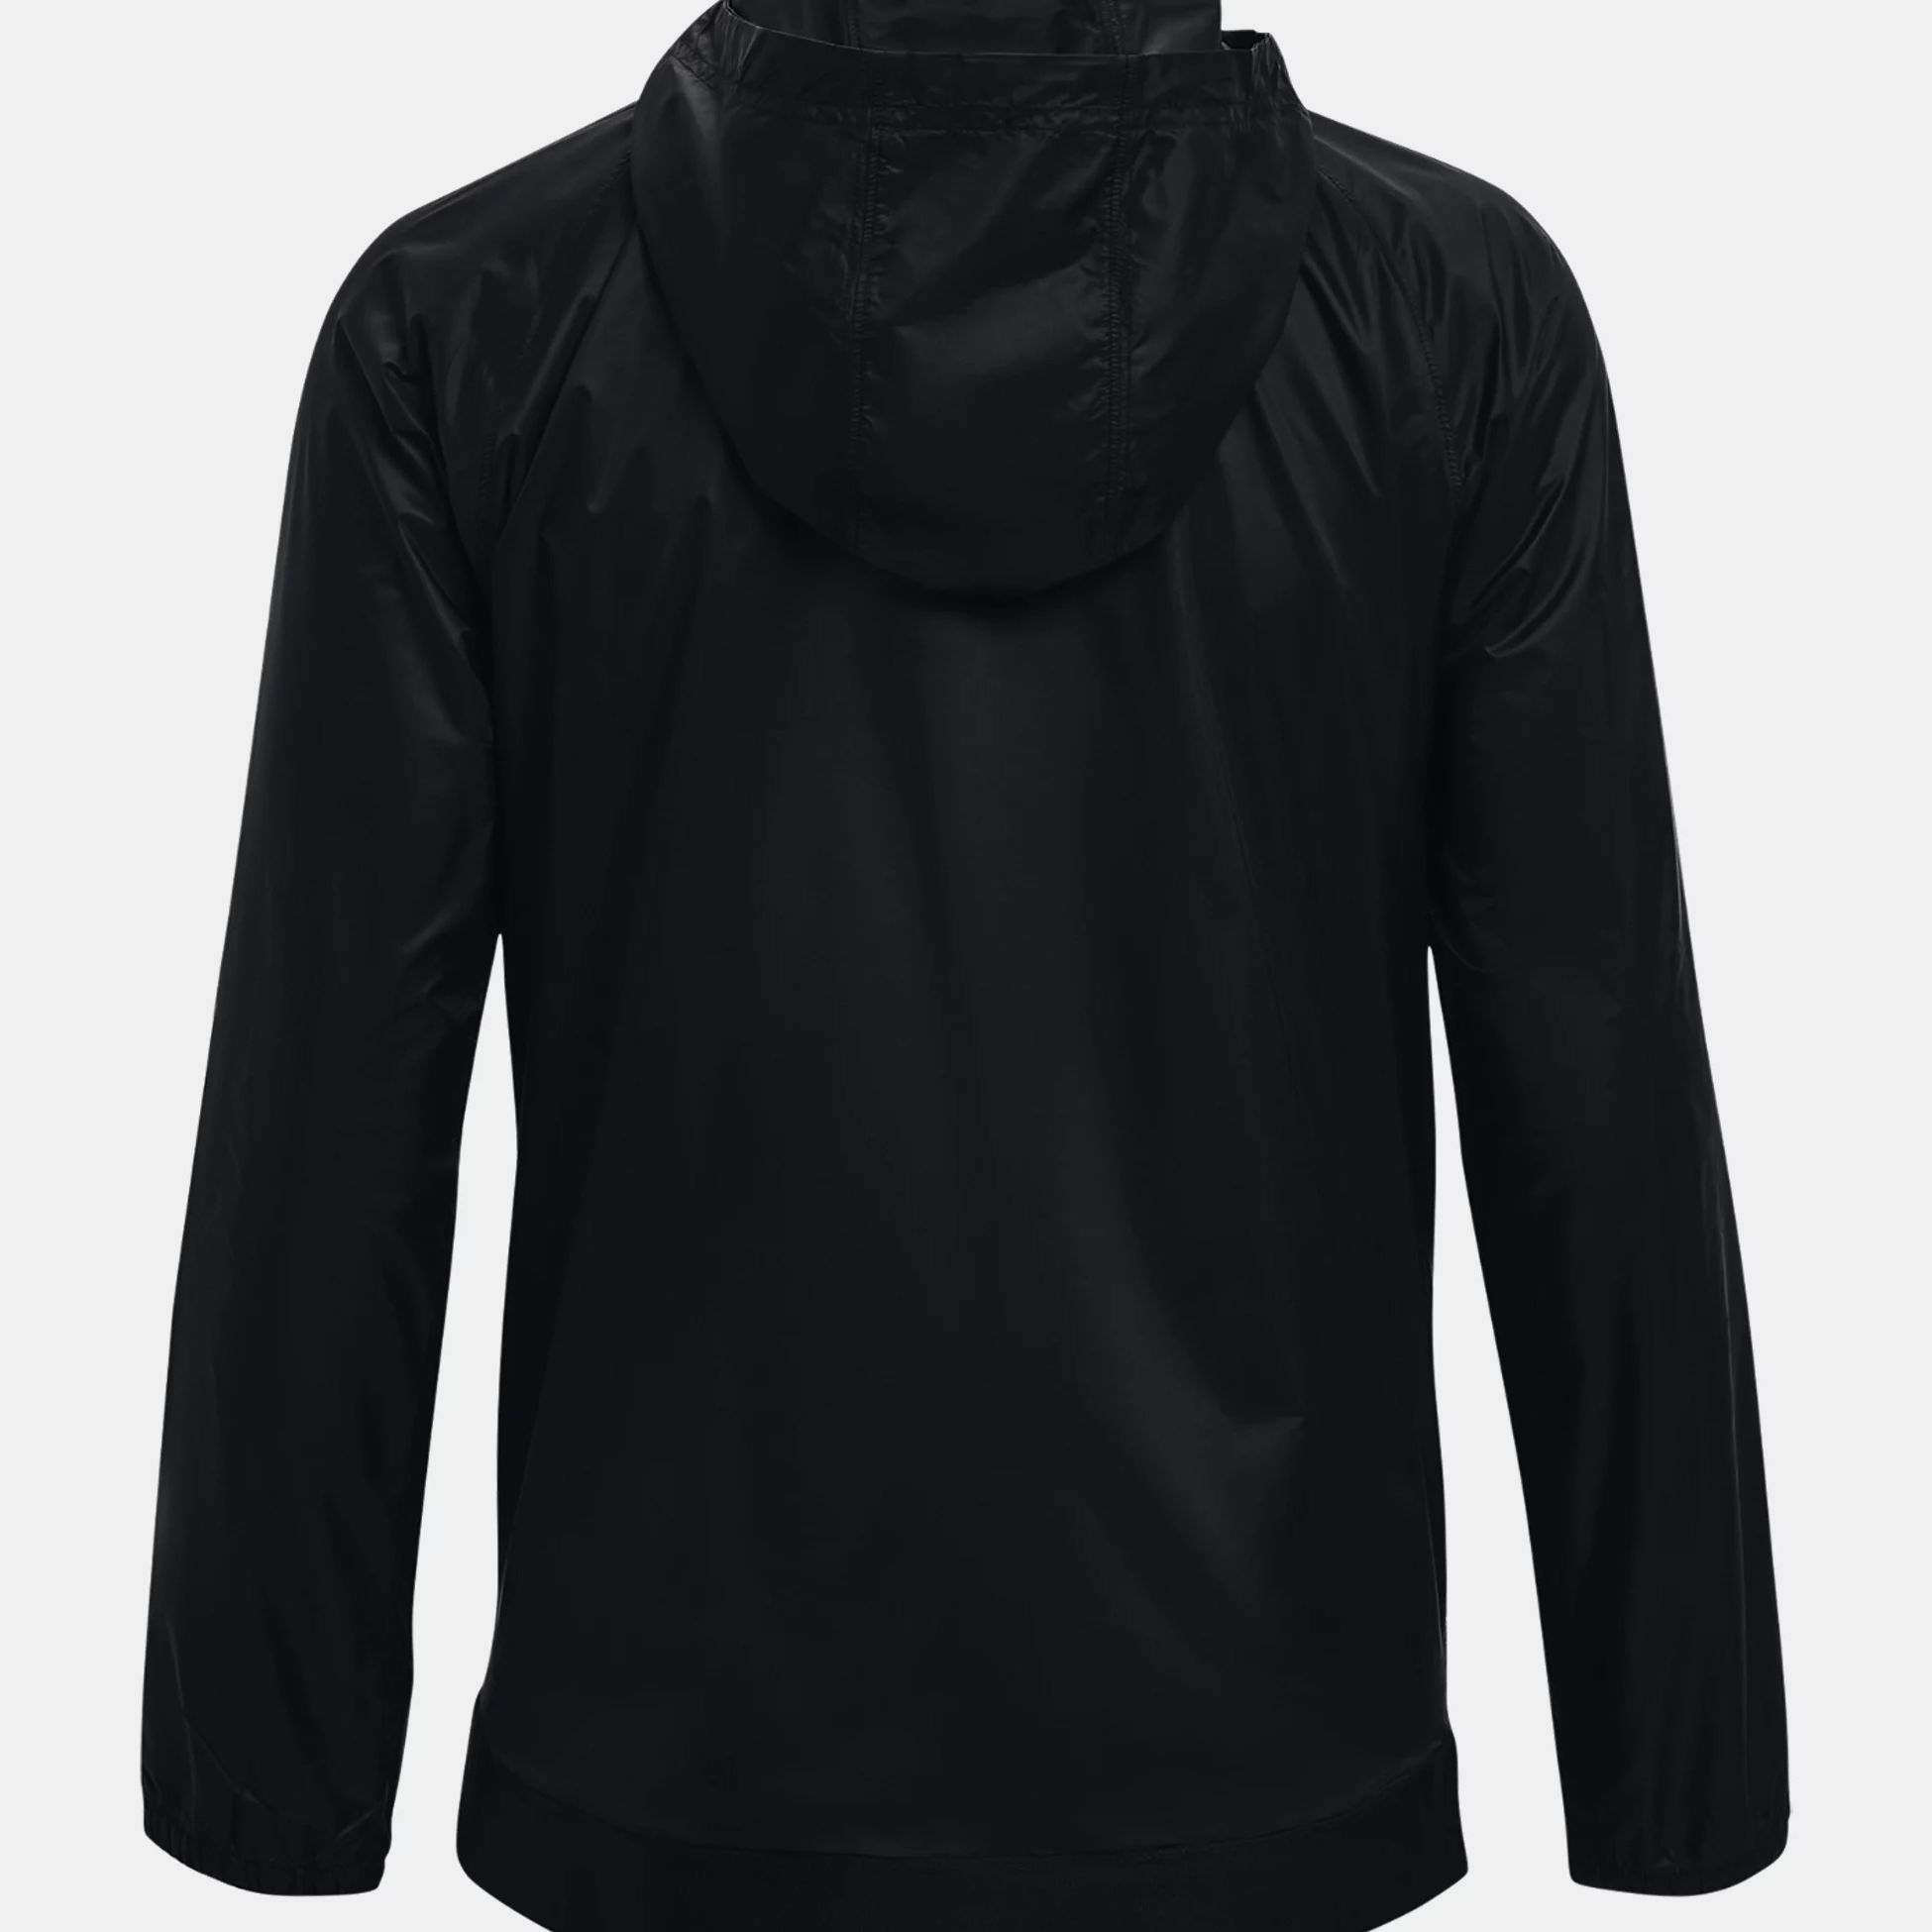 Geci & Veste -  under armour UA Woven Reversible Full Zip Jacket